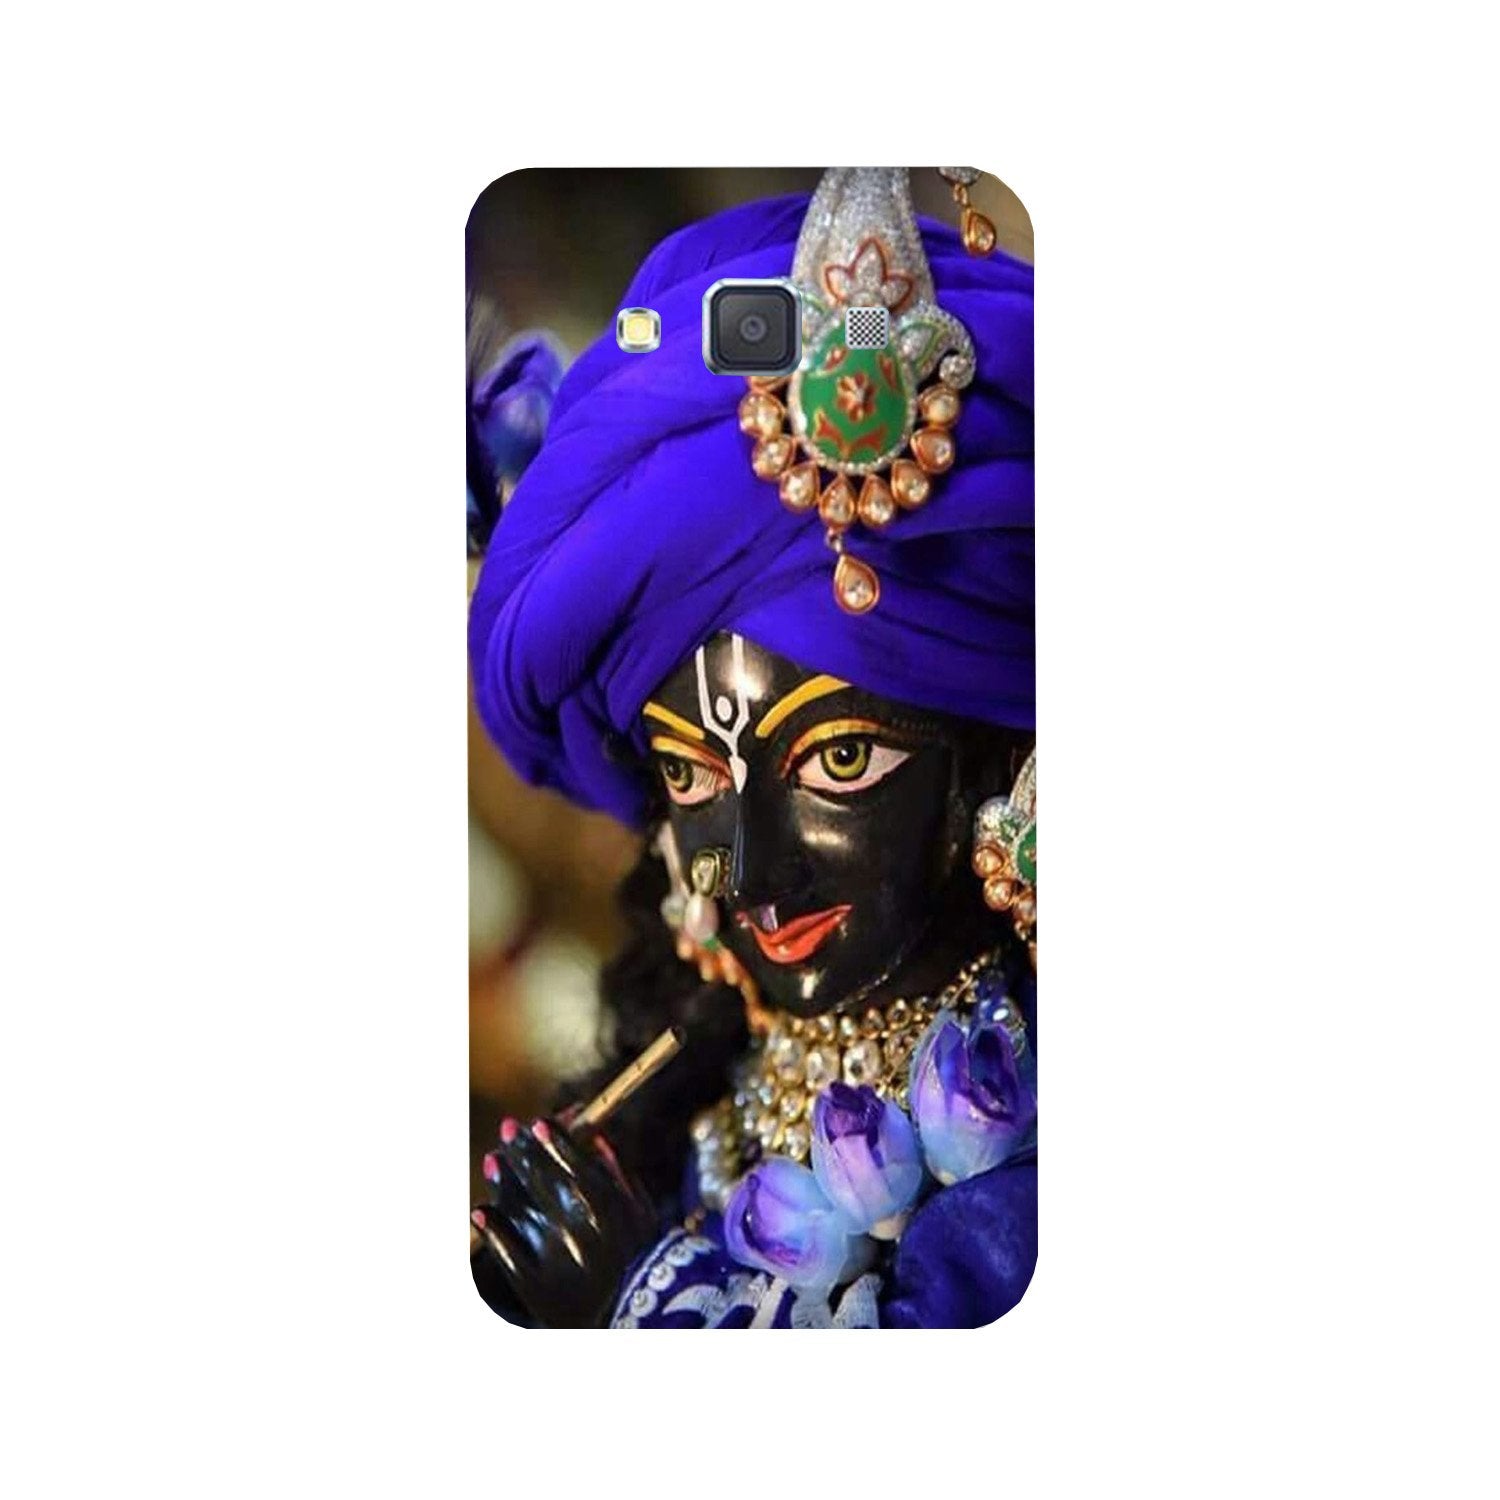 Lord Krishna4 Case for Galaxy A3 (2015)